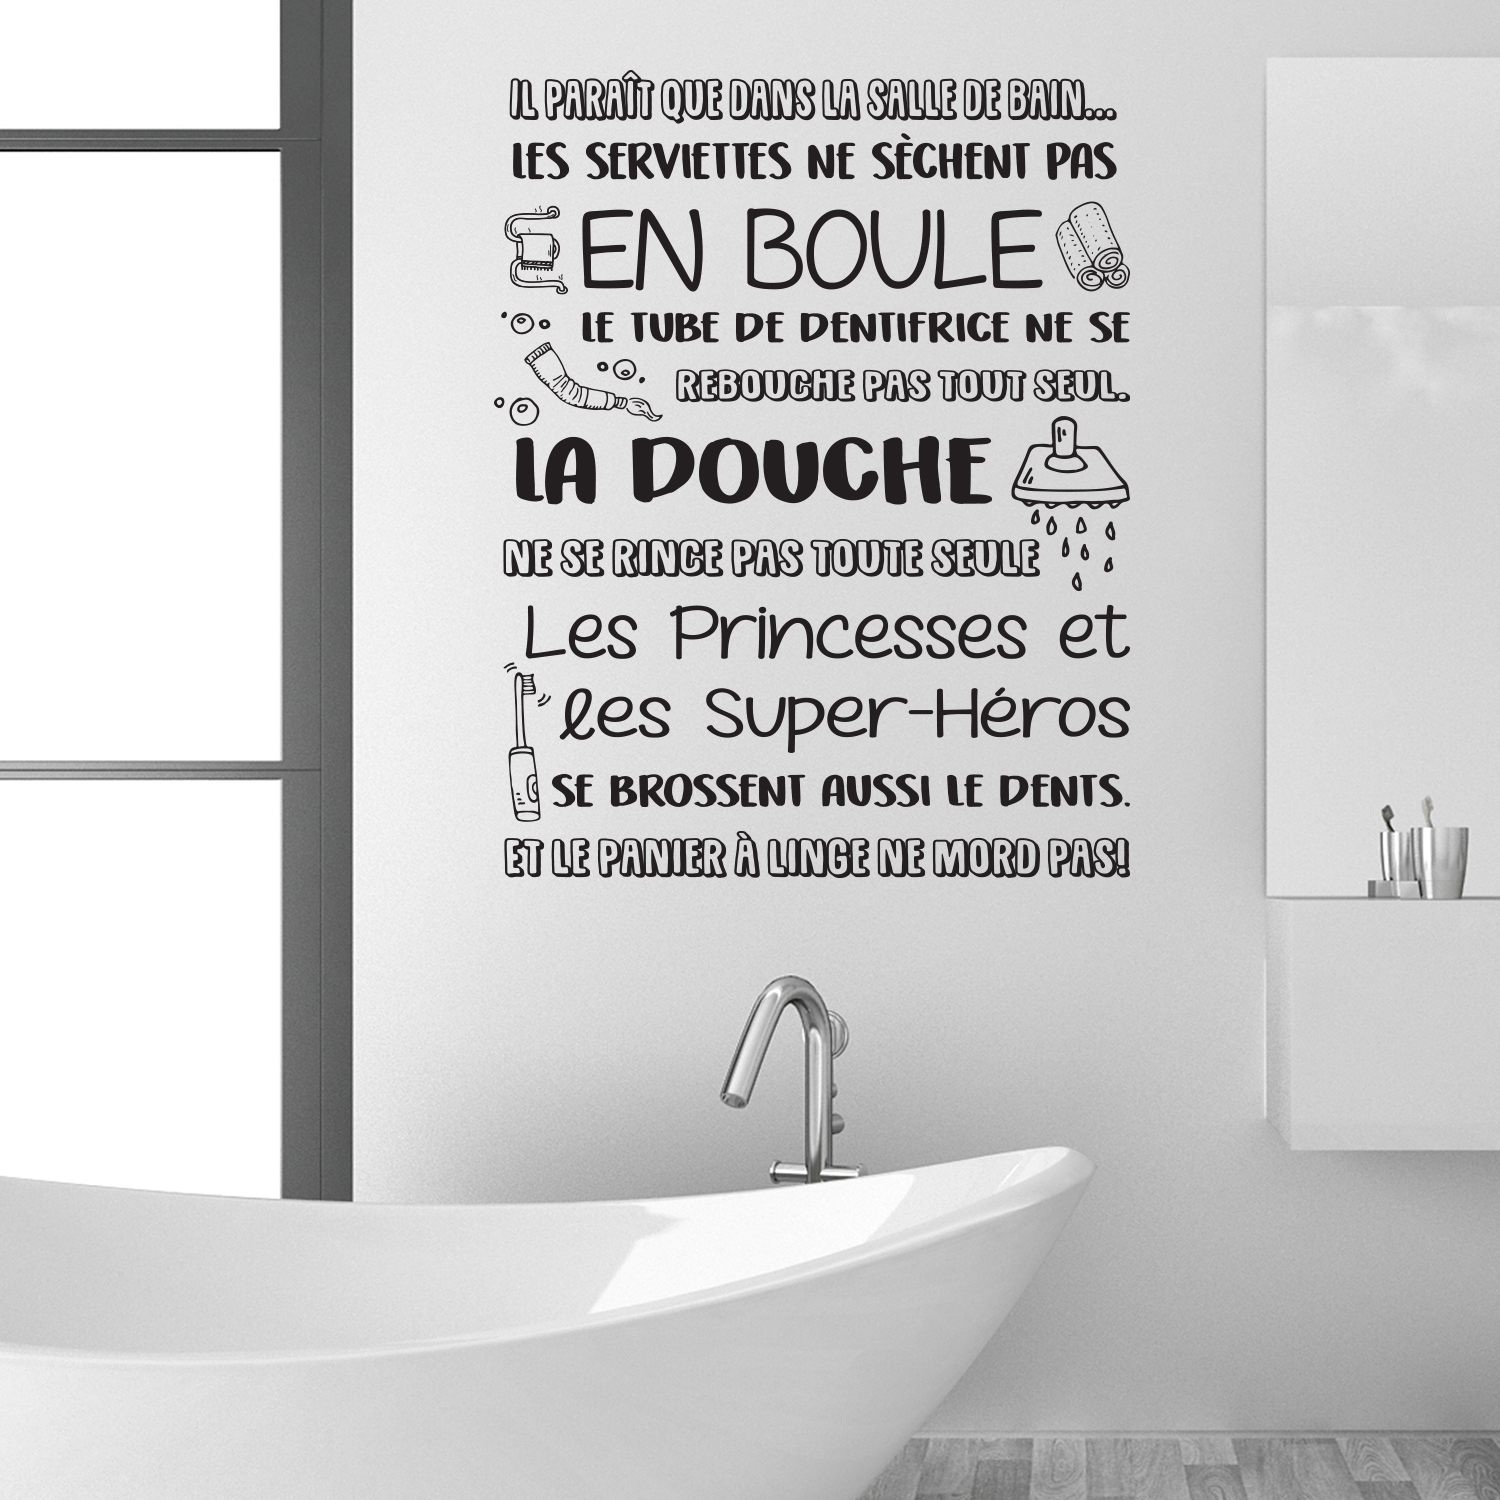 Salle de Bain Wall Sticker-Wall Sticker-Wall Sticker-Bathroom Sticker-Français  Bathroom Sticker-Home Decor-Salle de Bain -  France